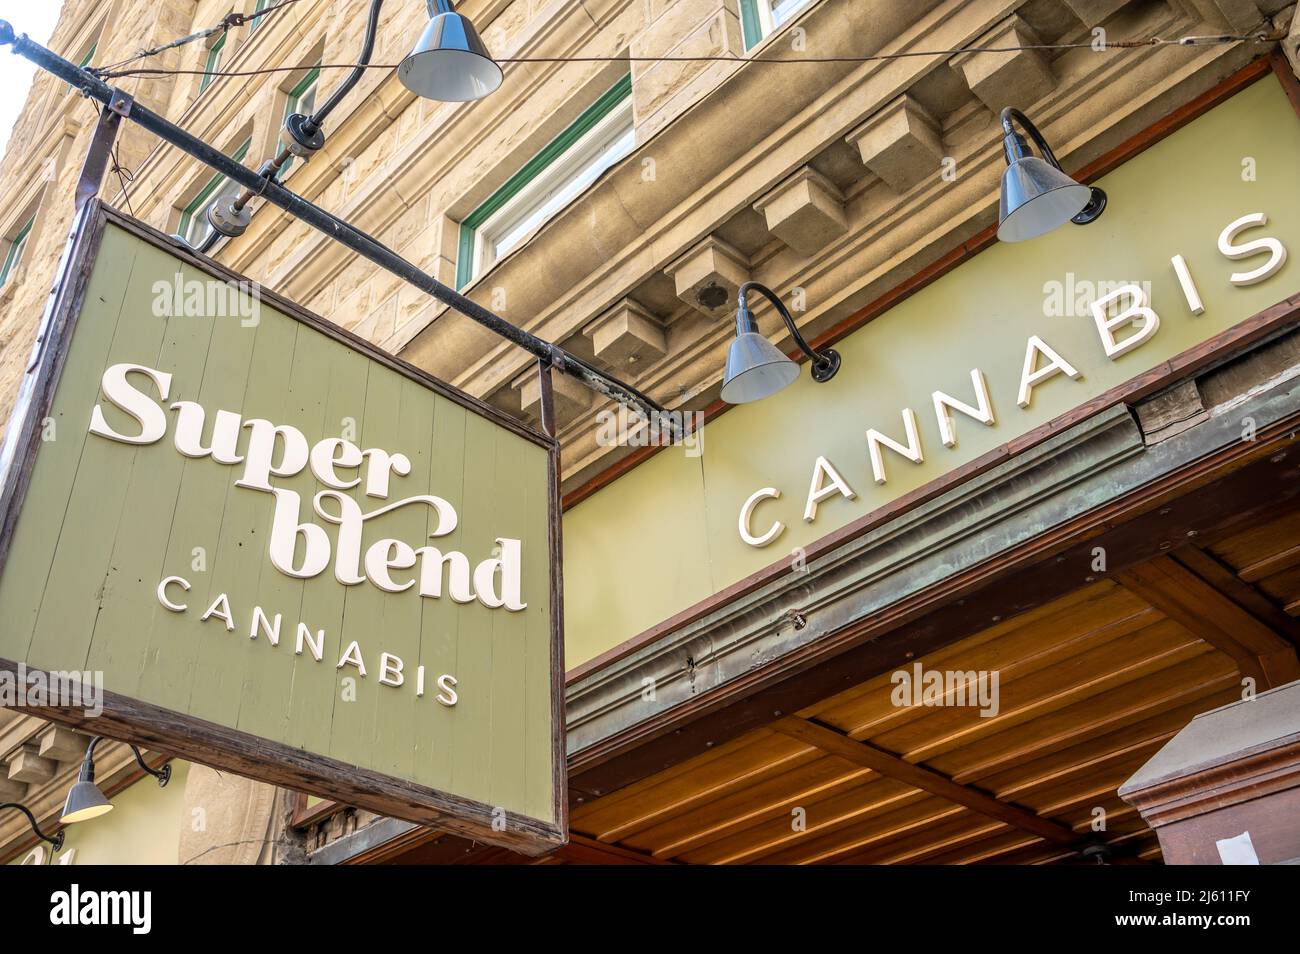 Calgary, Alberta - April 24, 2022: Superblend Cannabis store in downtown Calgary, Aberta. Stock Photo